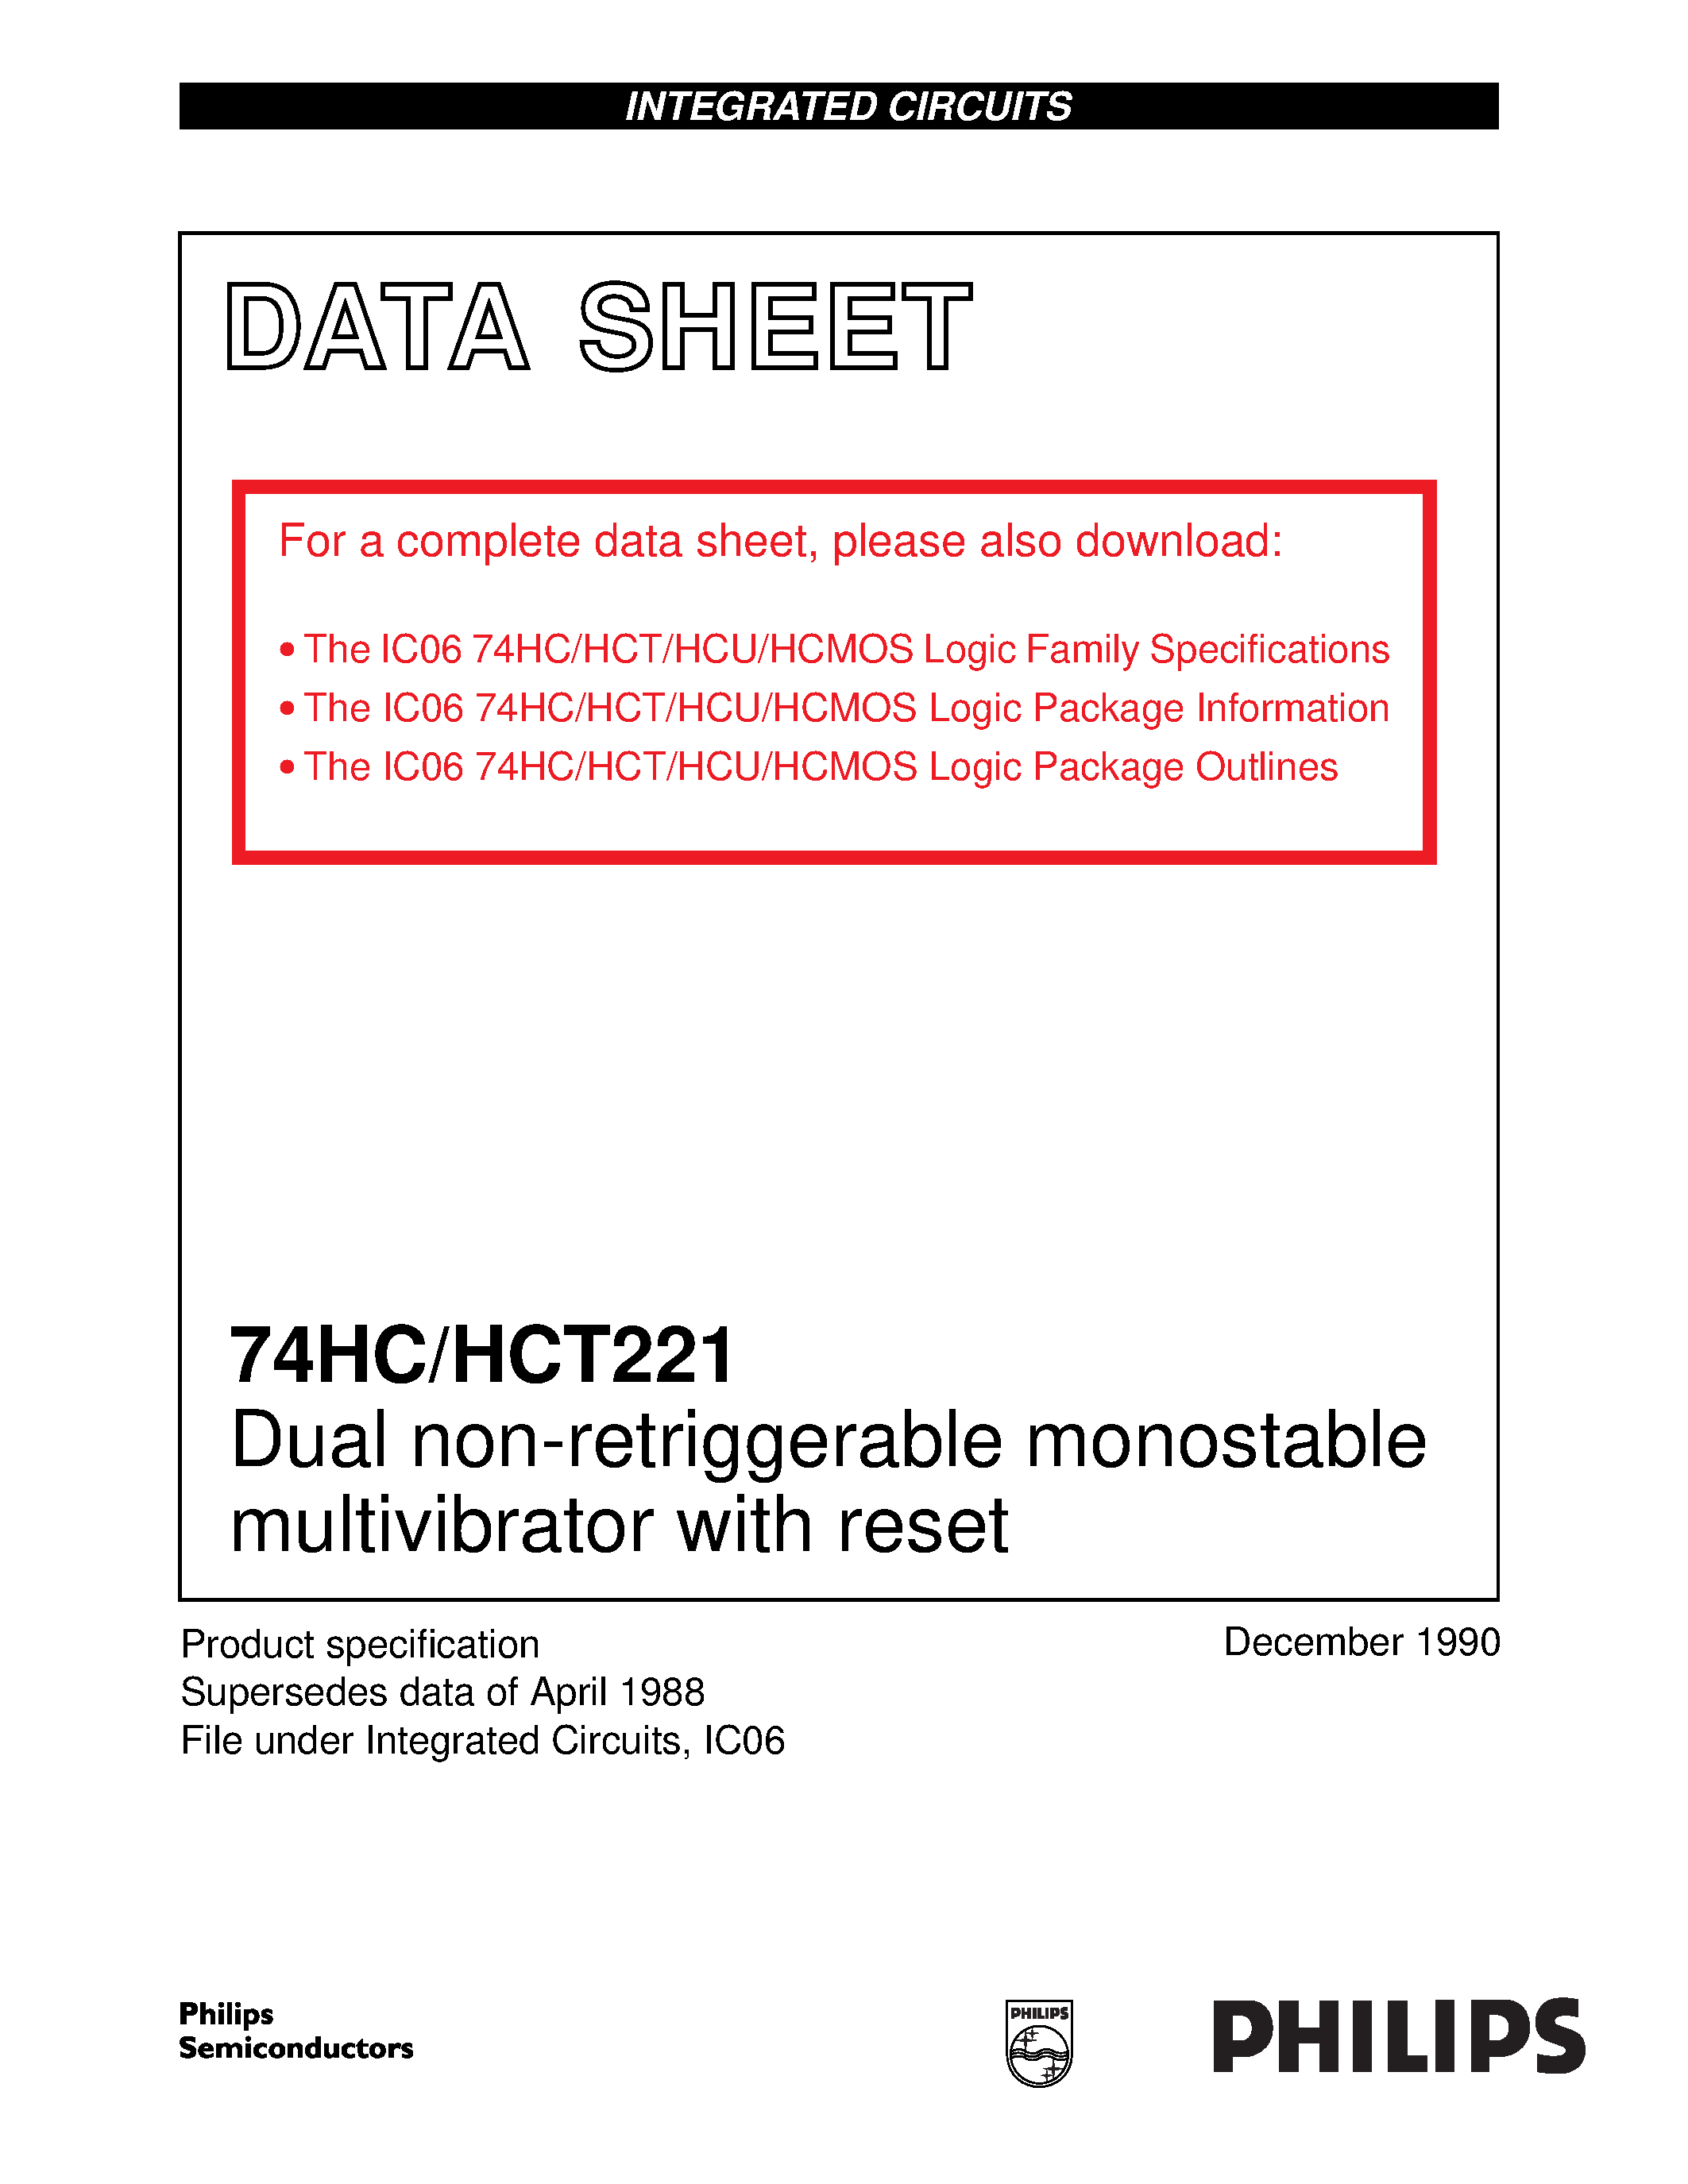 Даташит 74221 - Dual non-retriggerable monostable multivibrator with reset страница 1